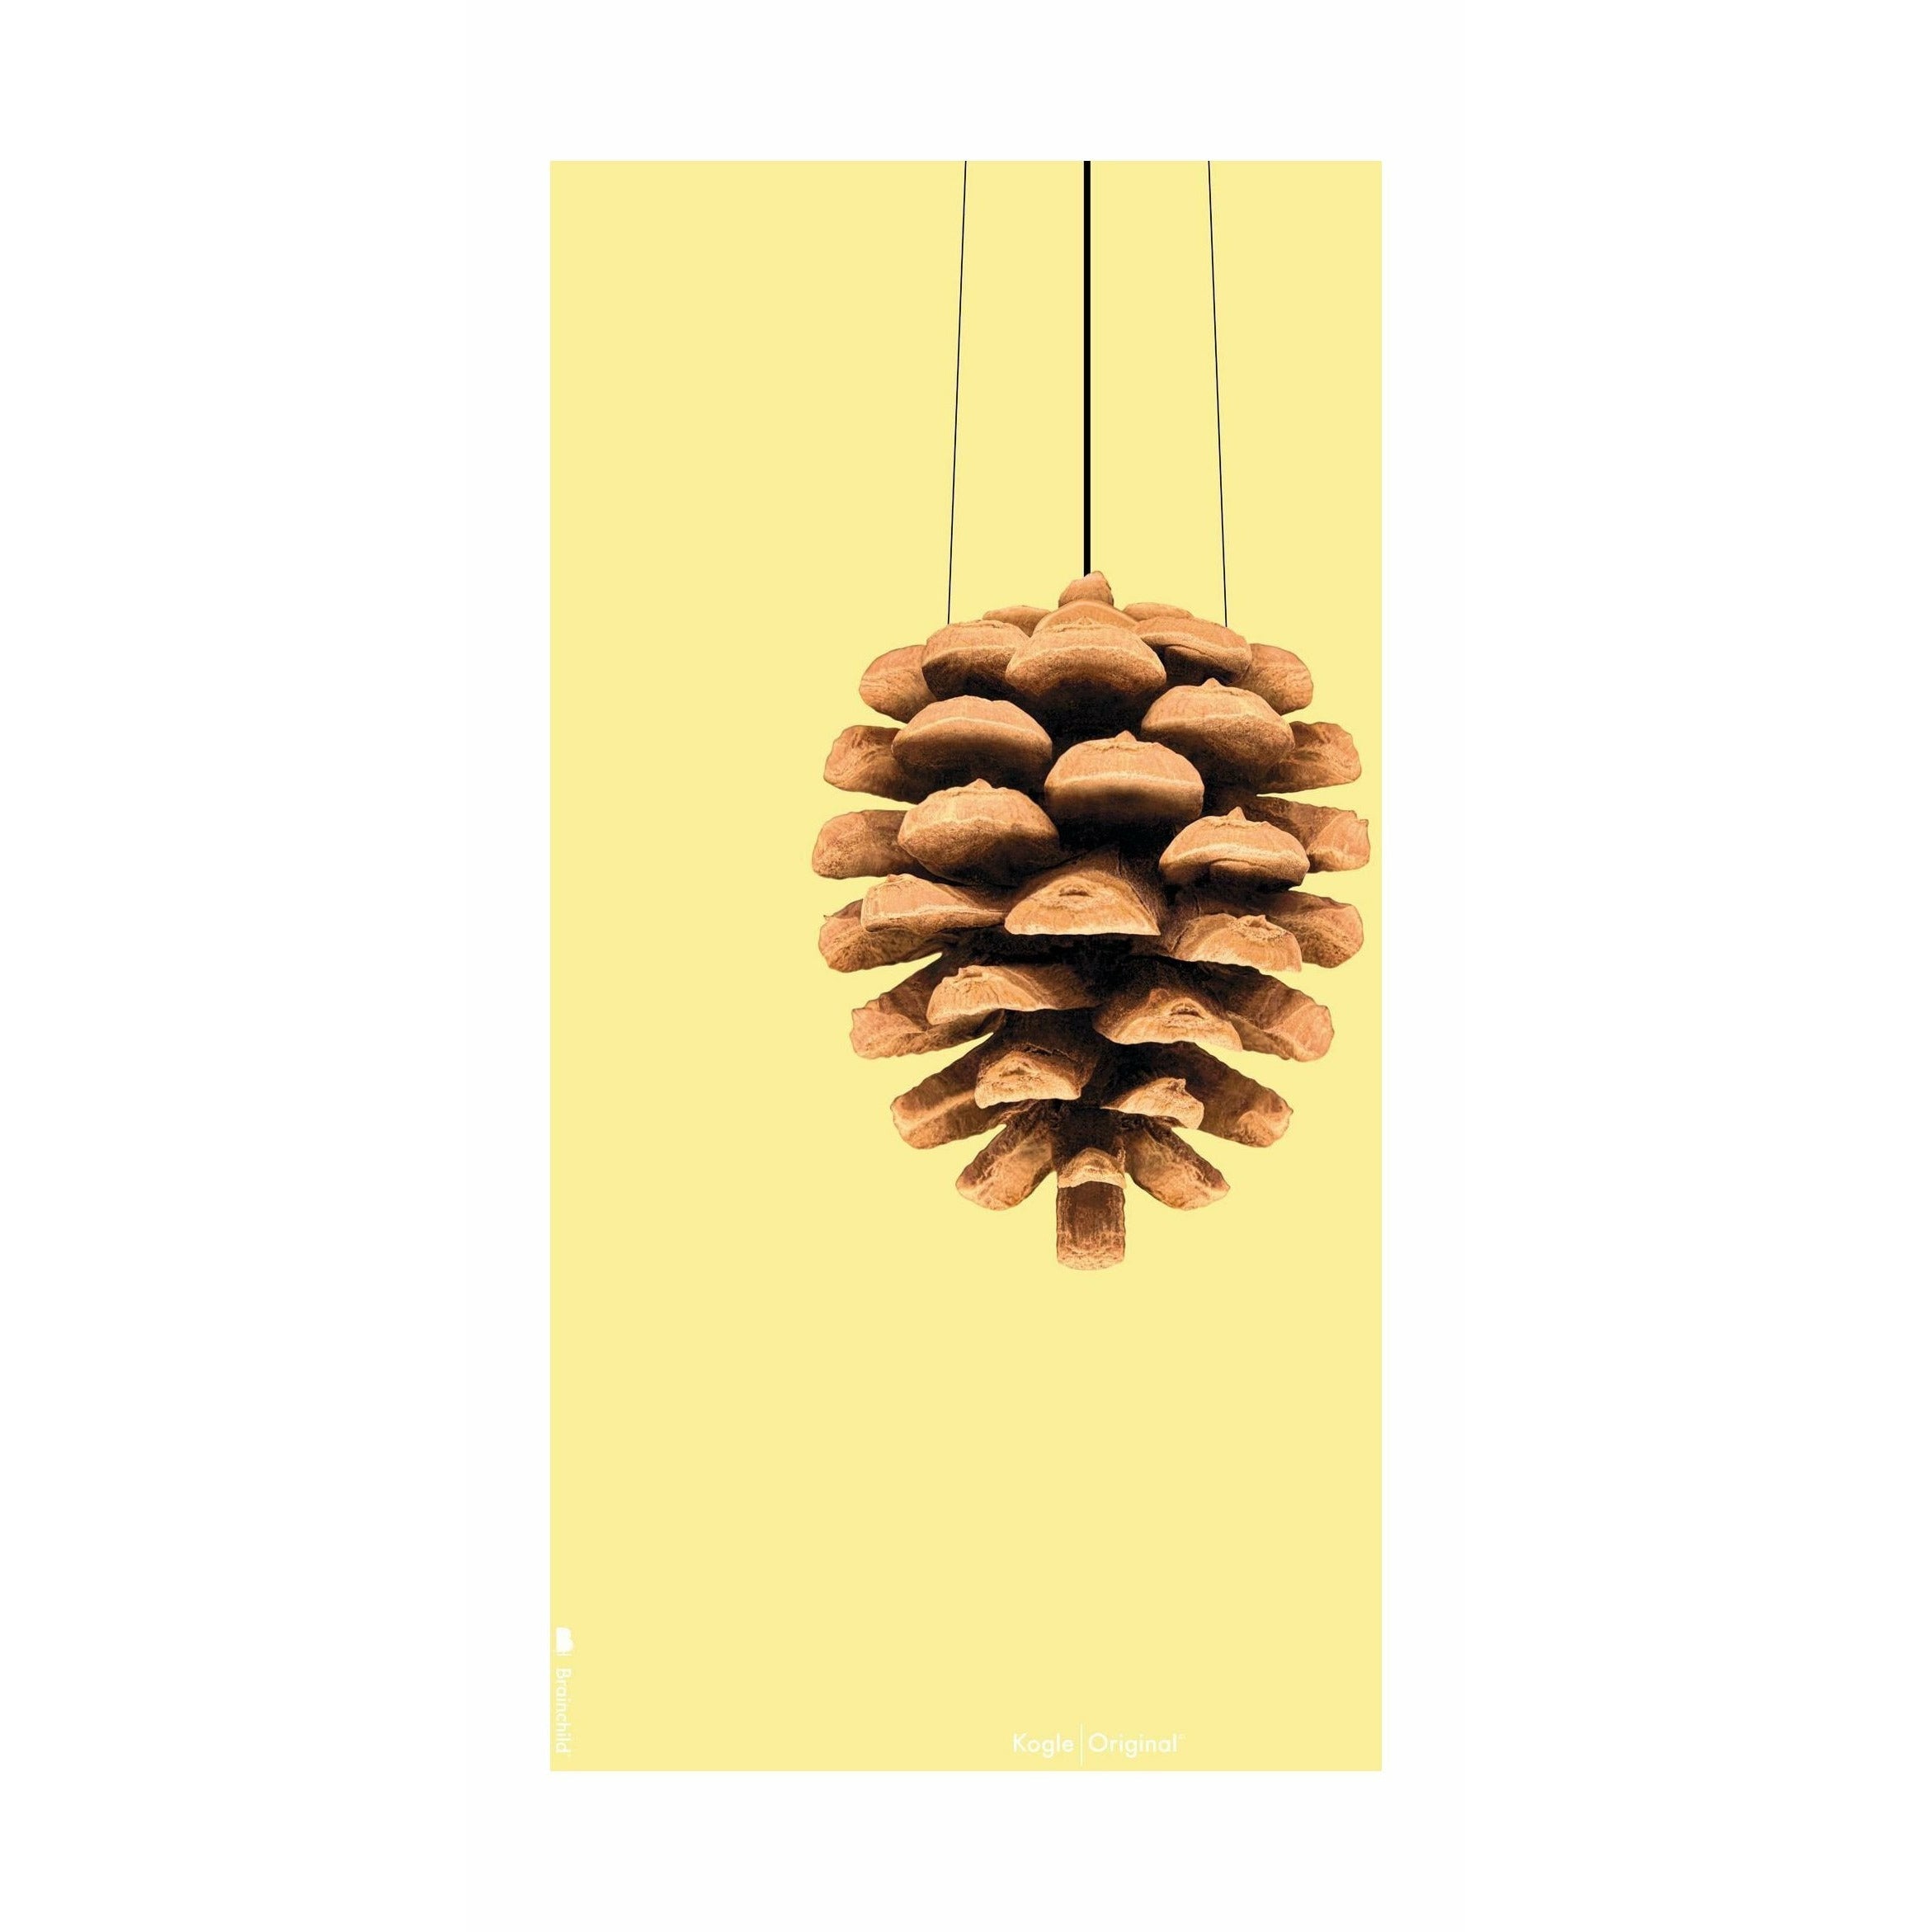 Brainchild Pine Cone Classic Poster uten ramme 70 x100 cm, gul bakgrunn